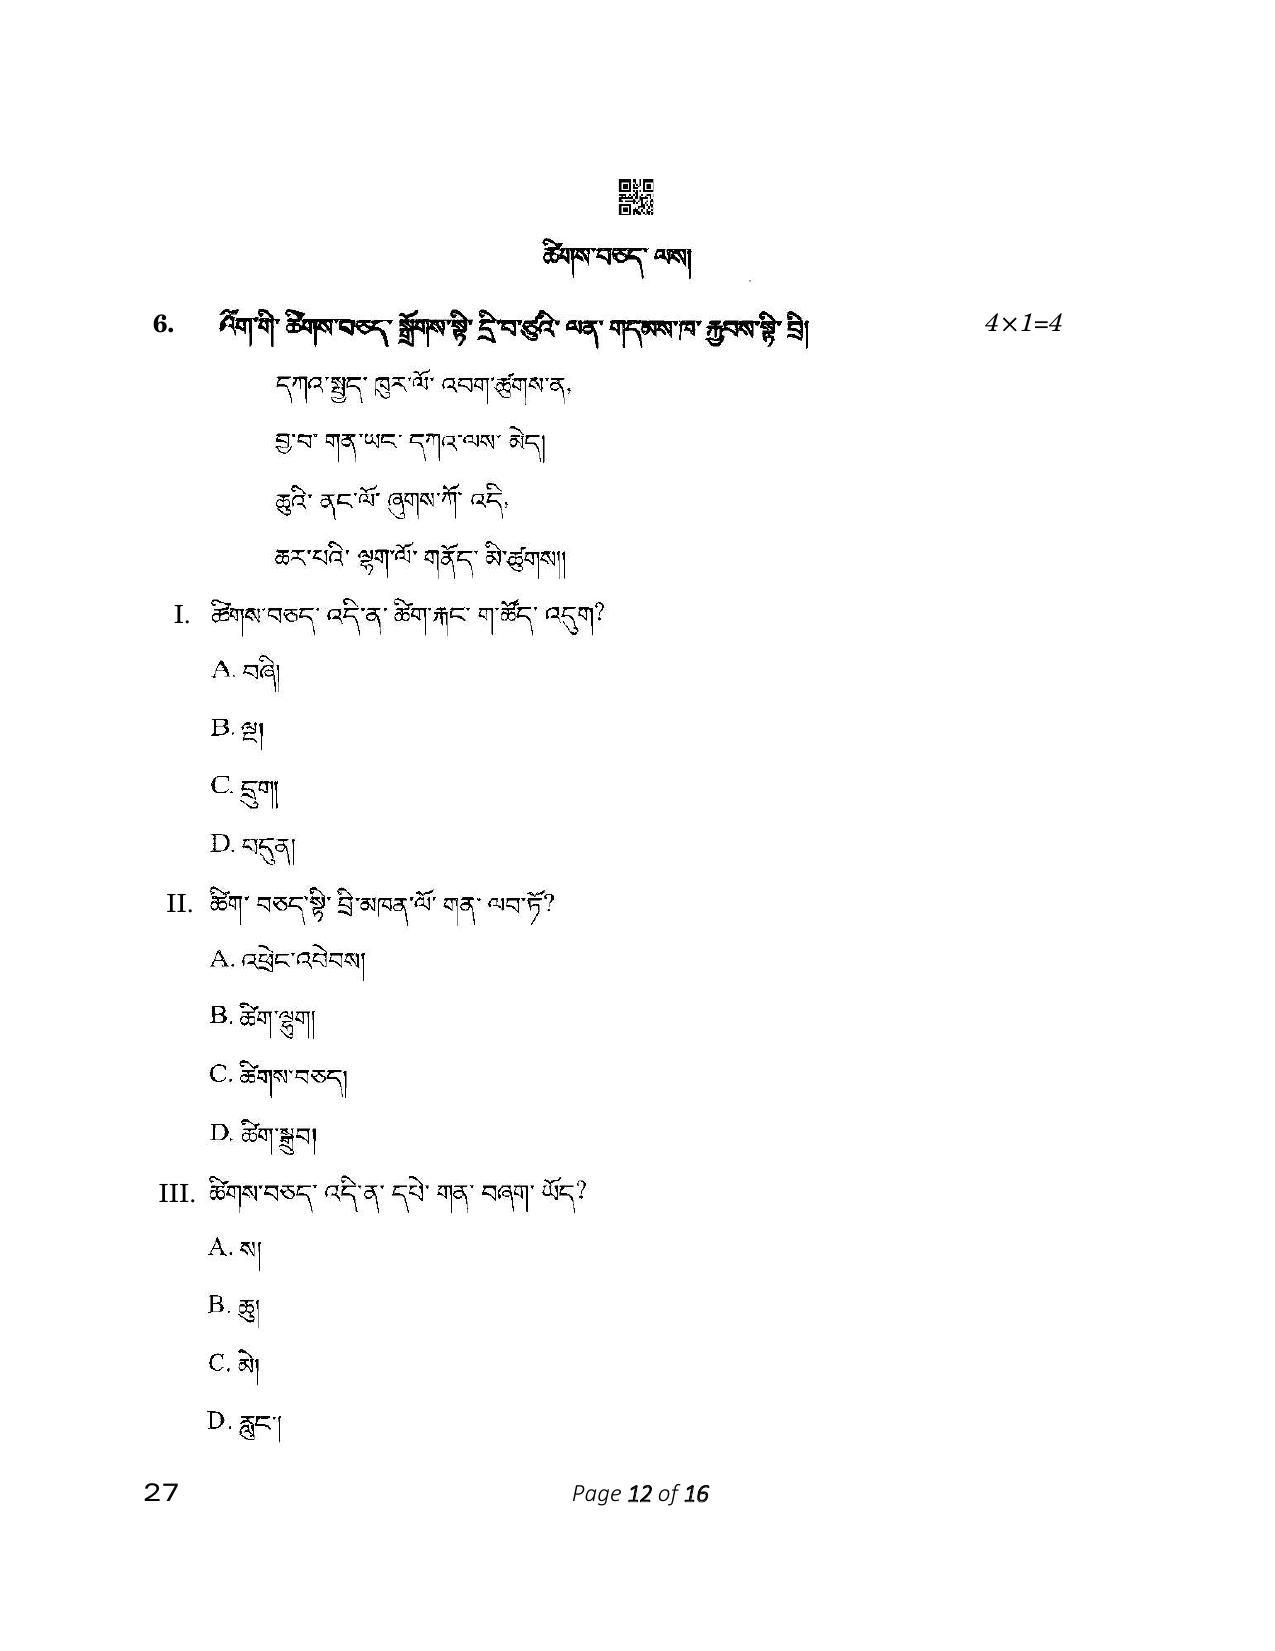 CBSE Class 12 27_Bhutia 2023 2023 Question Paper - Page 12